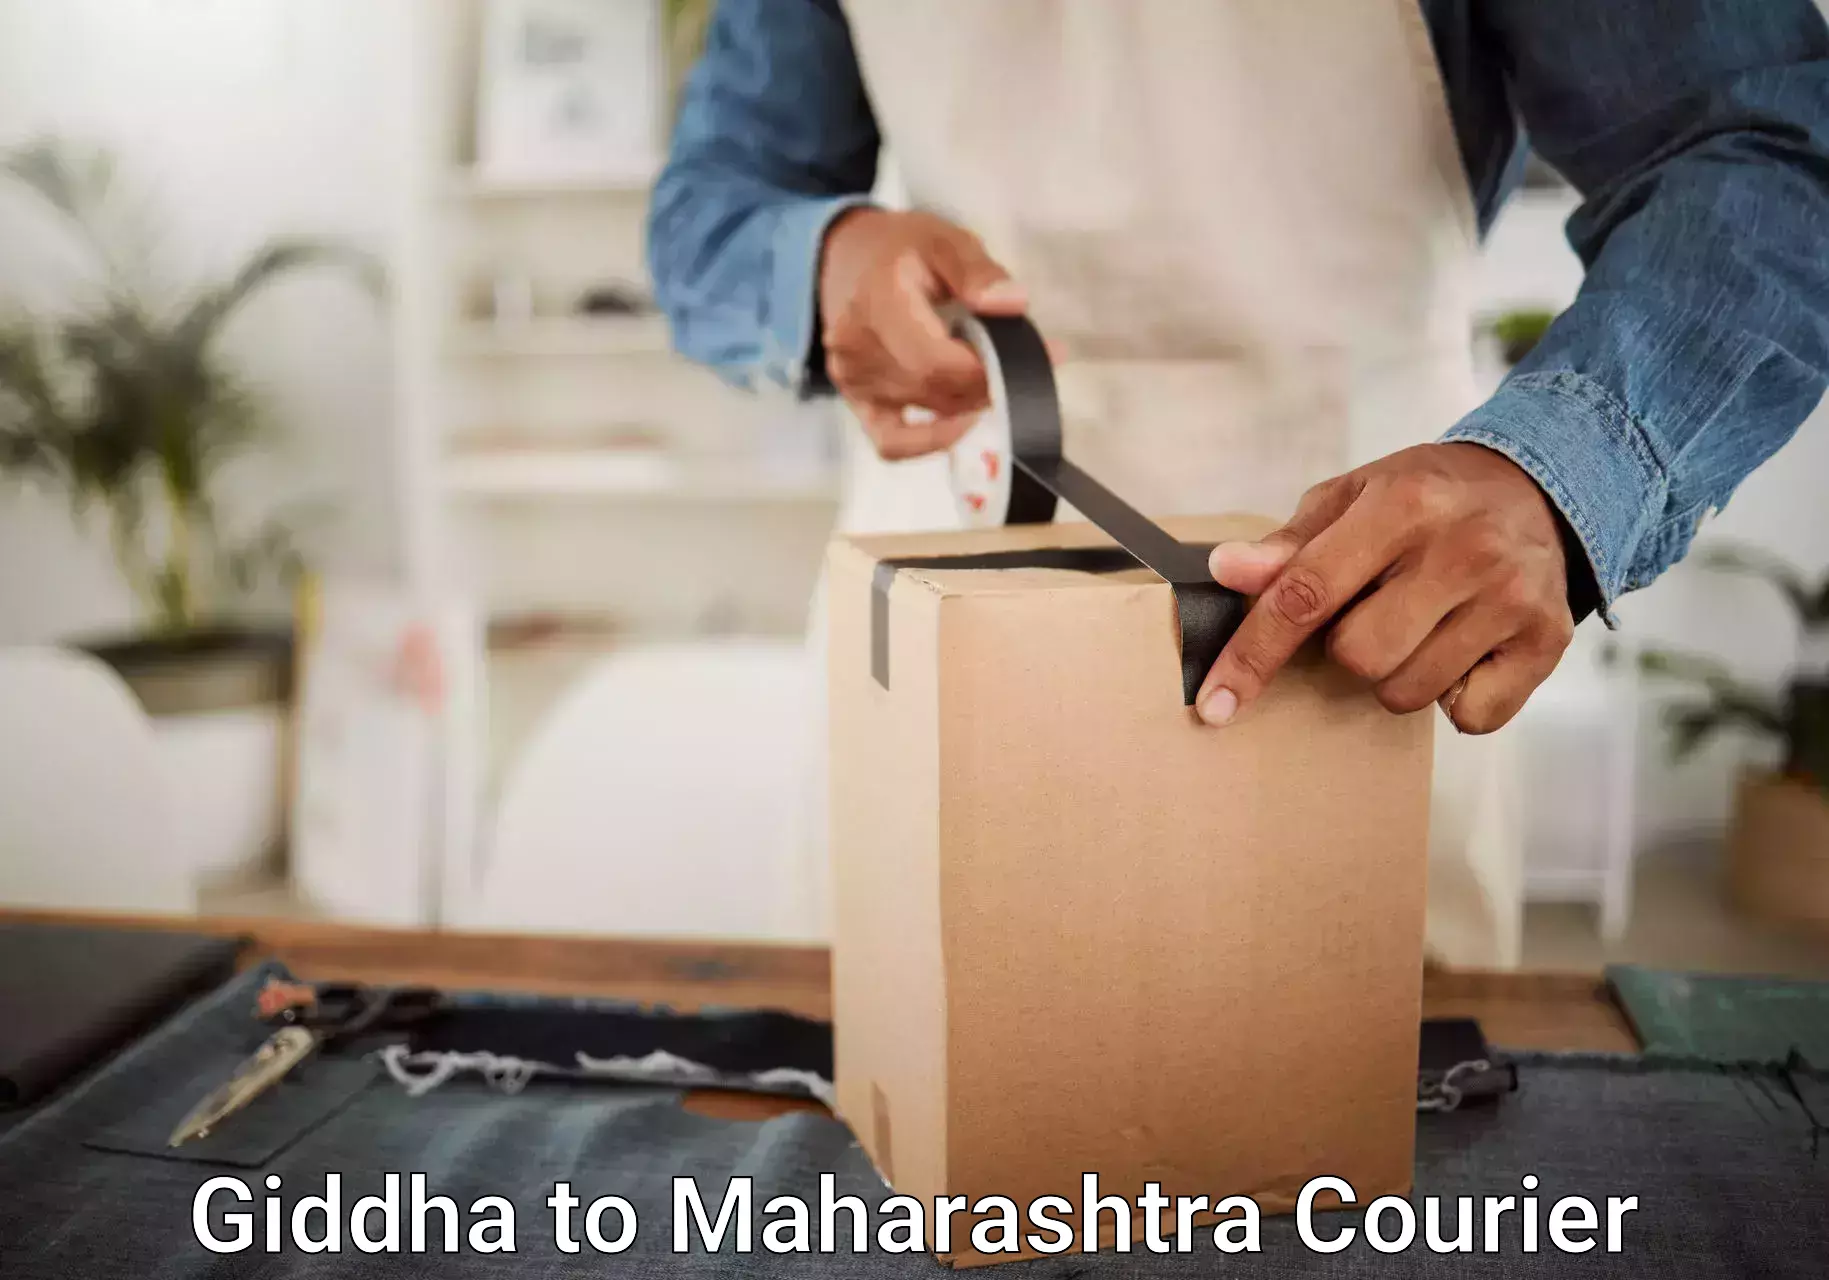 Urgent luggage shipment Giddha to Maharashtra